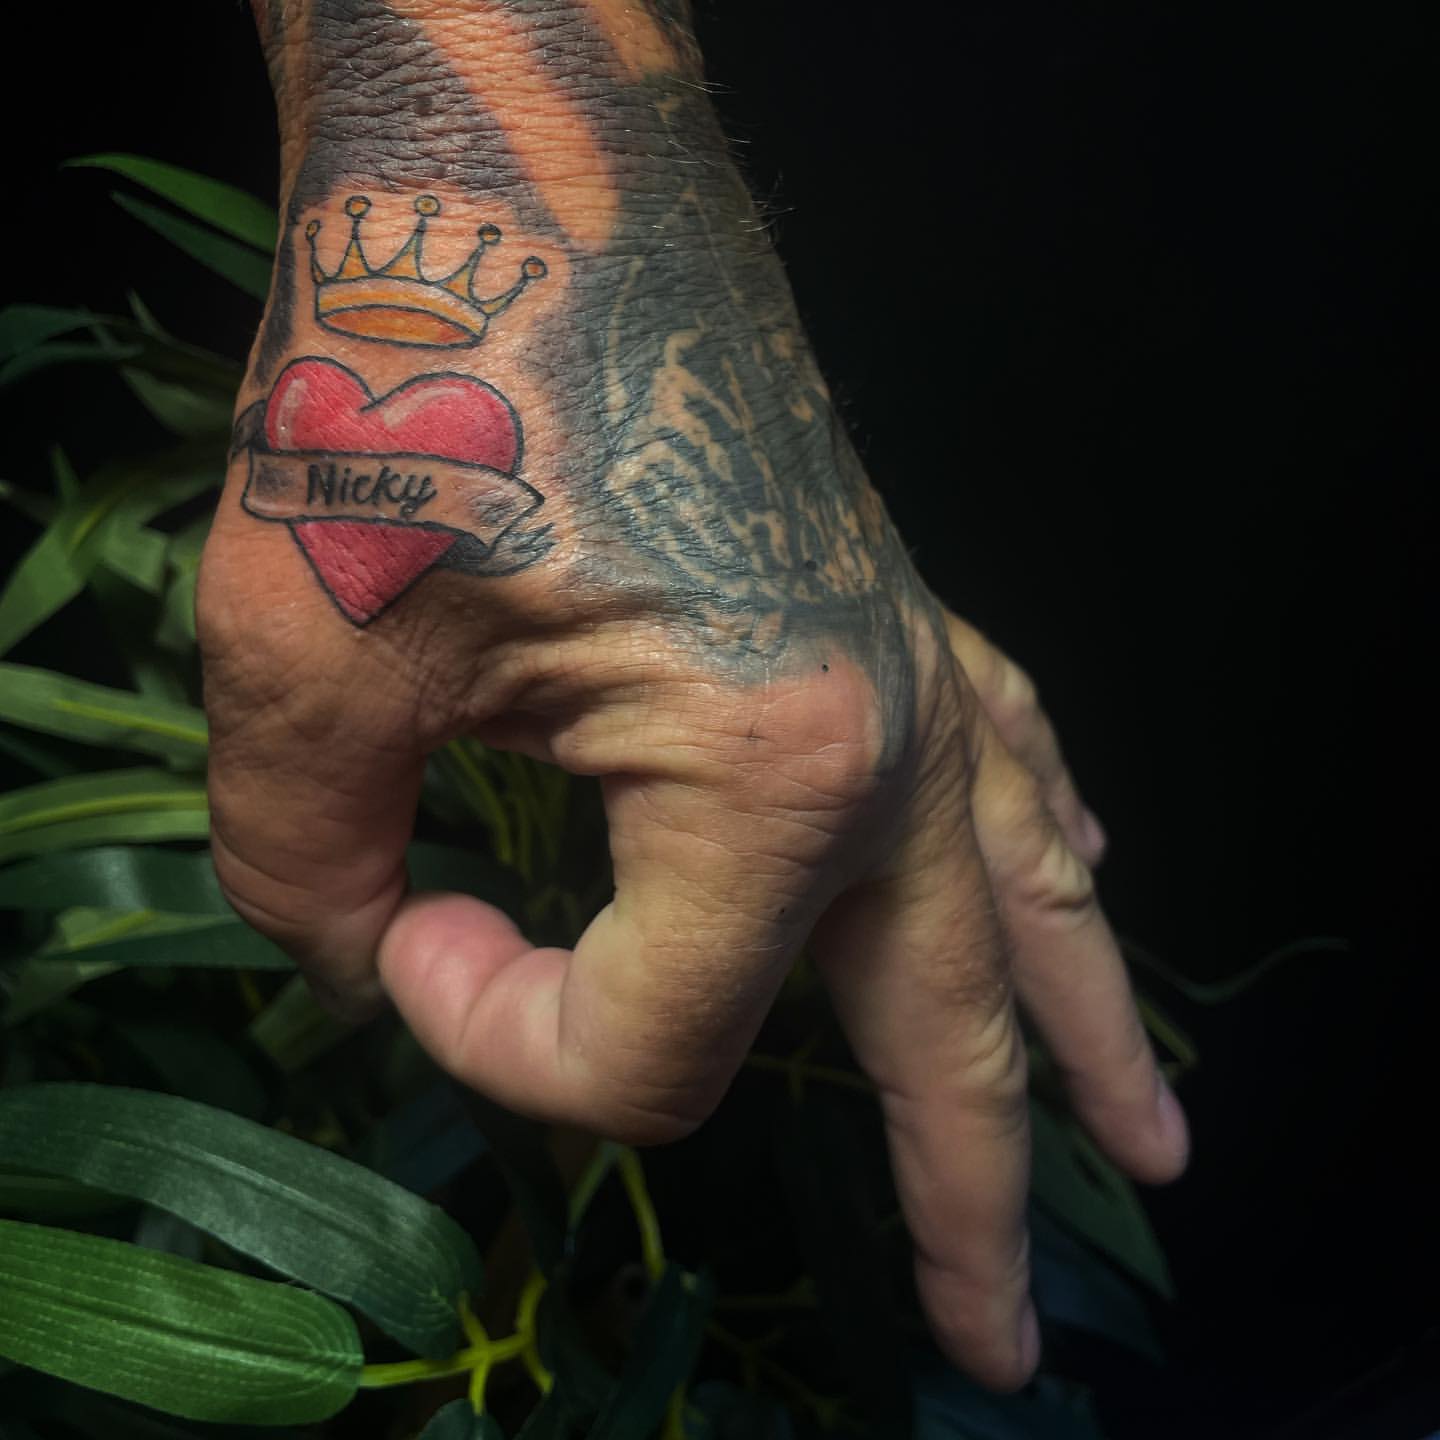 Hand Tattoo Ideas For Men